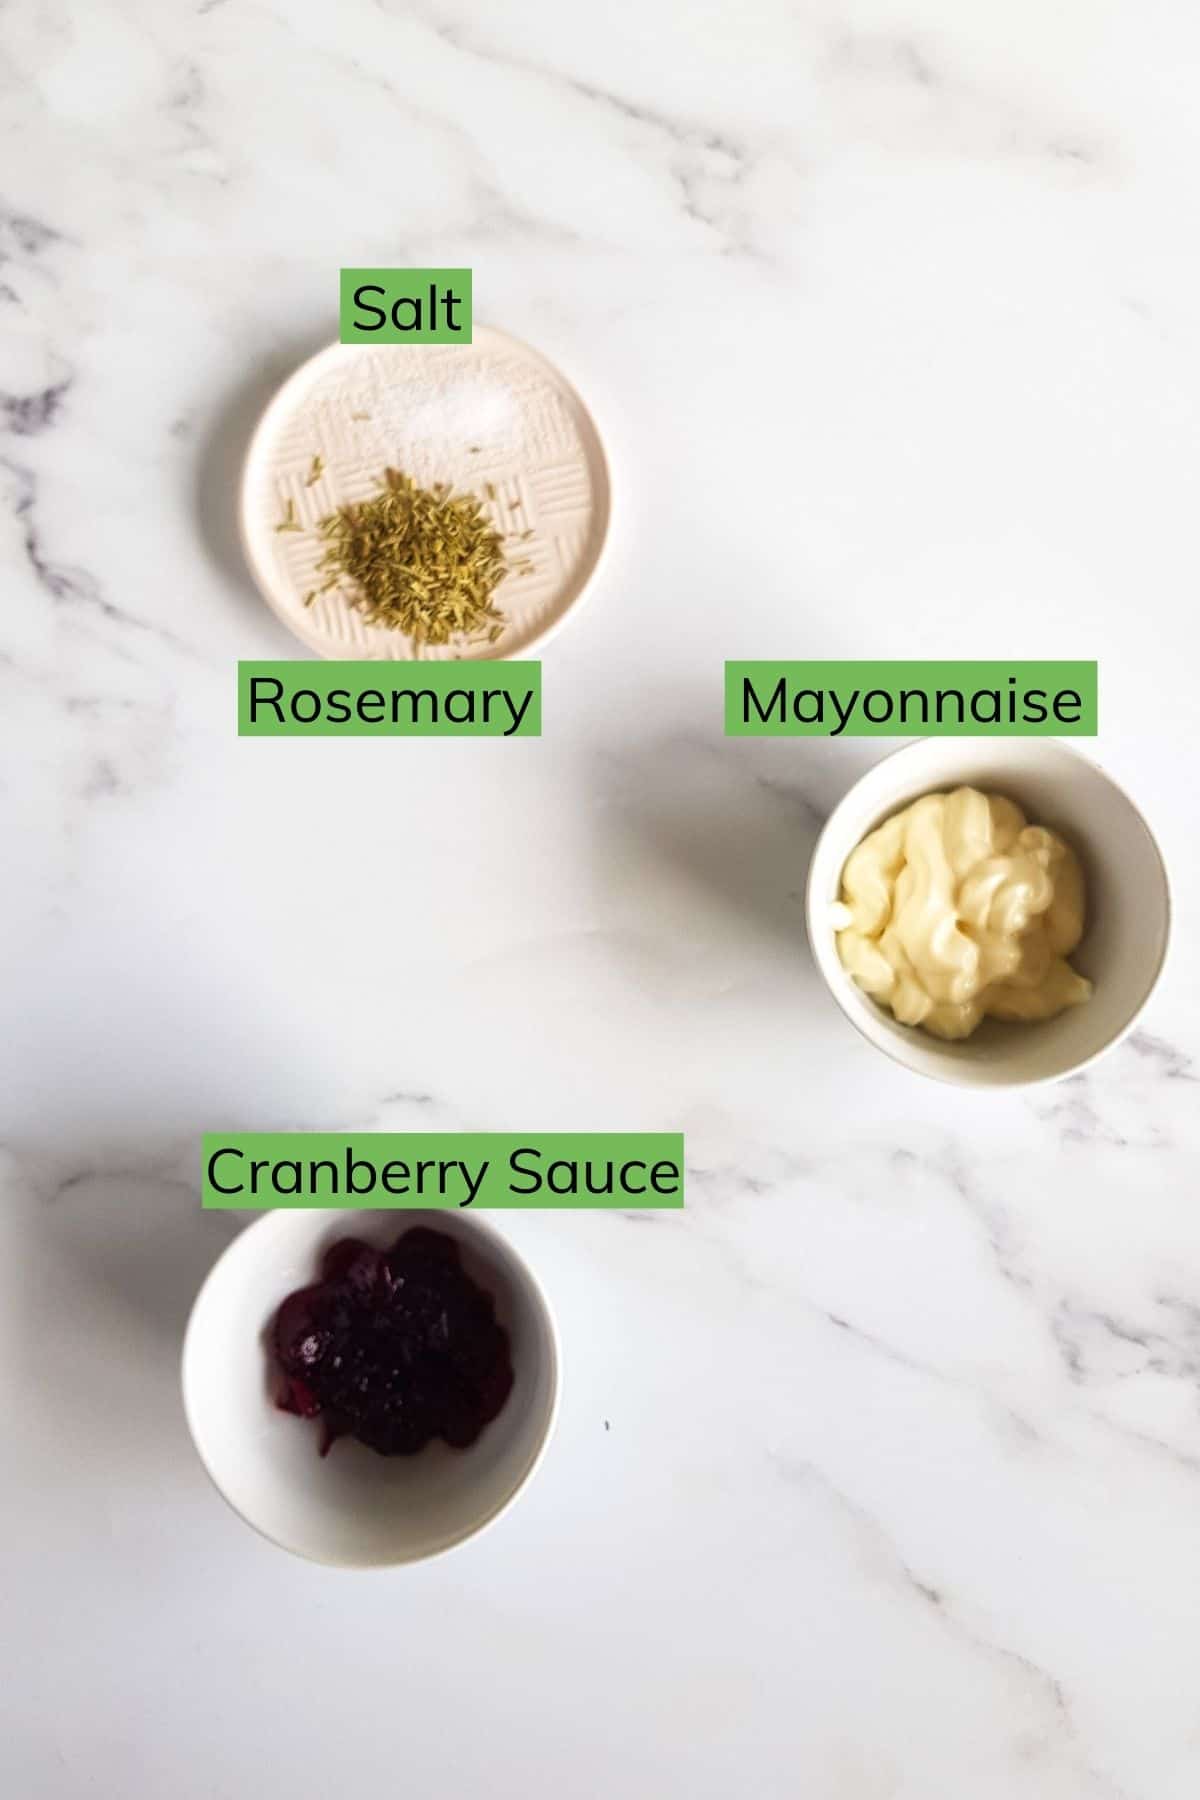 Mayonnaise, cranberry sauce, rosemary and salt on a table.